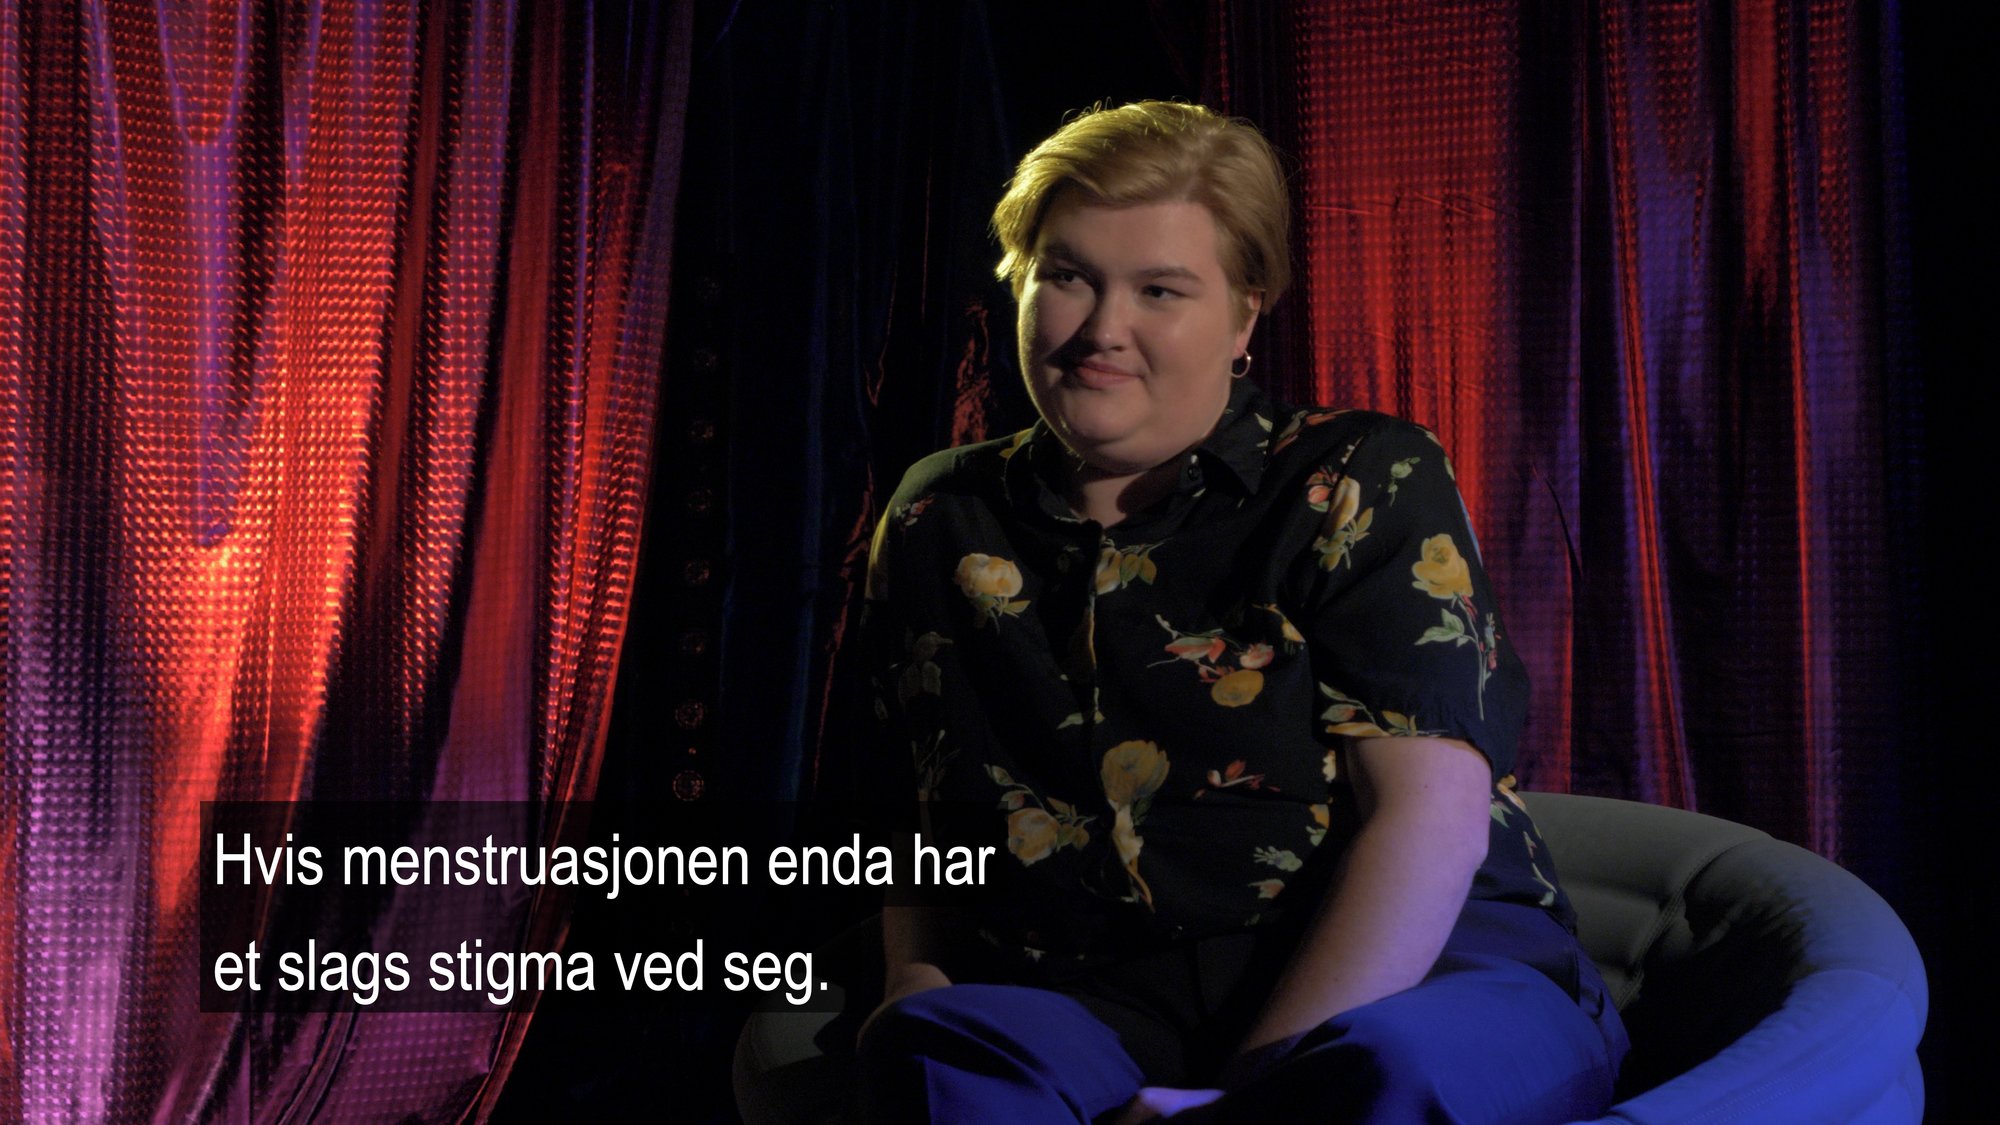 Filmstill from "Talkshow". A talkshow about menstruation, directed by Marin Håskjold for SYKLUS.